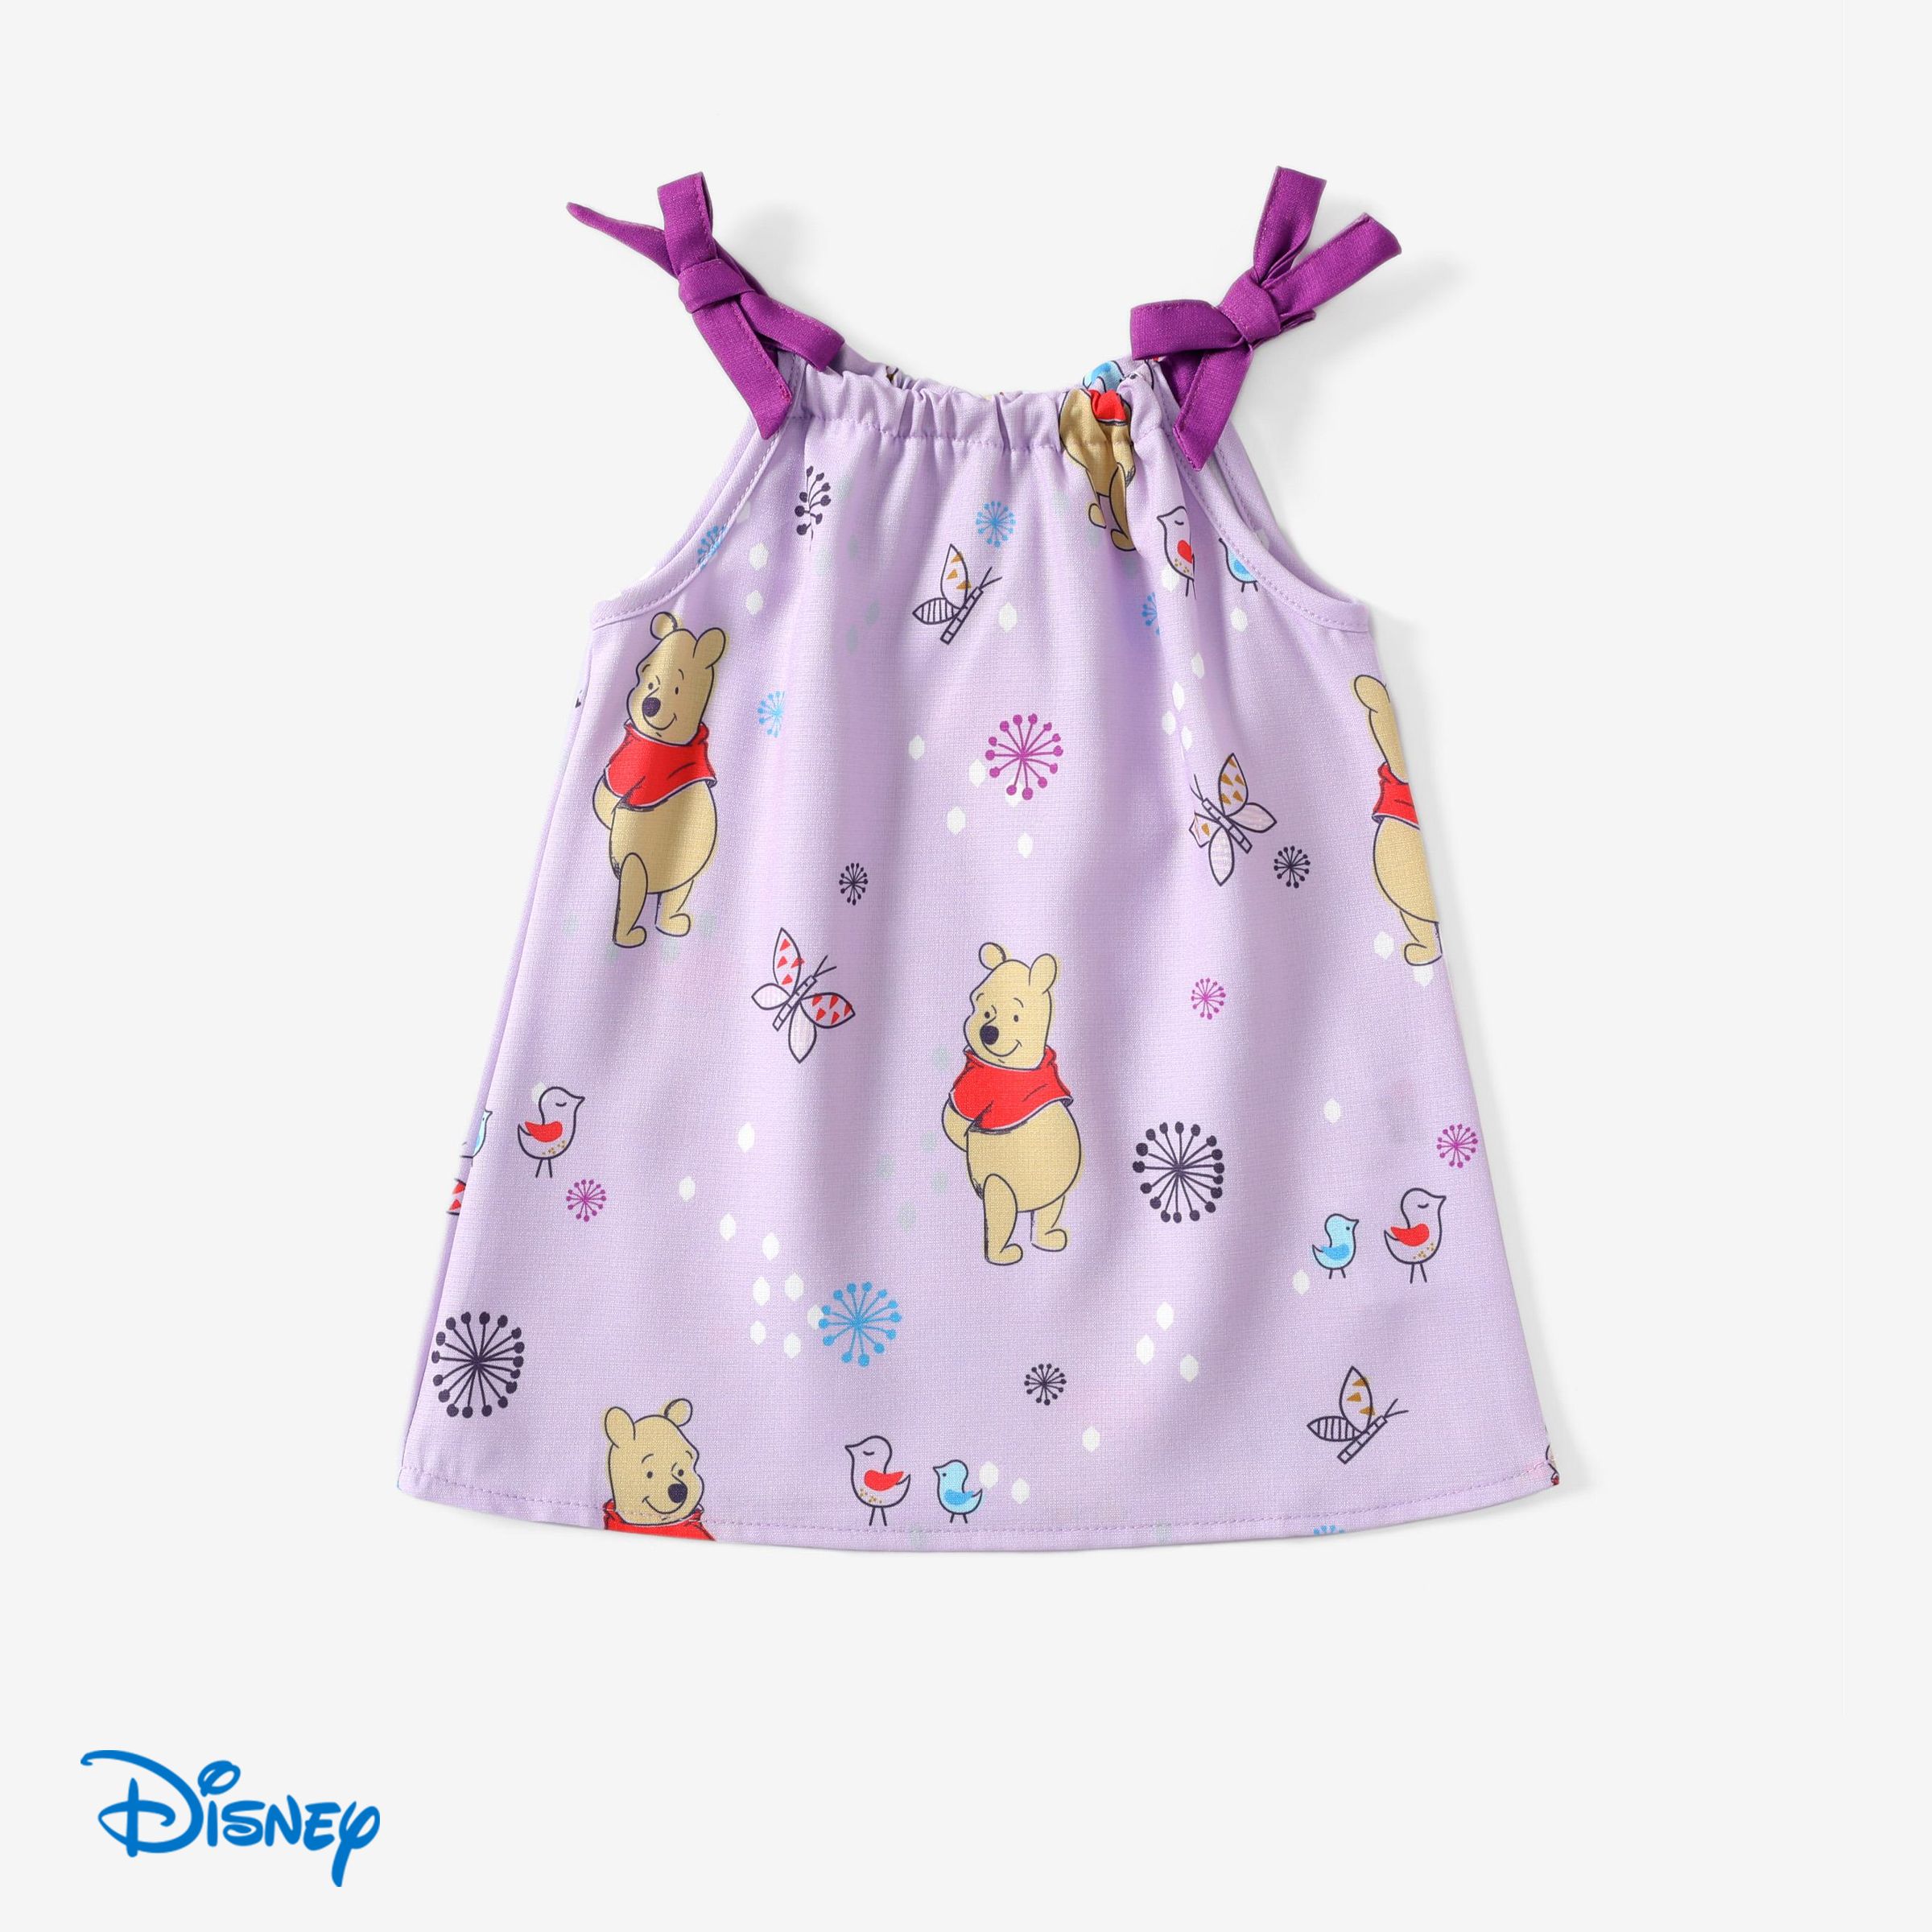 

Disney Winnie the Pooh Baby Girls 1pc Character Bowknot Floral Print Sleeveless Dress